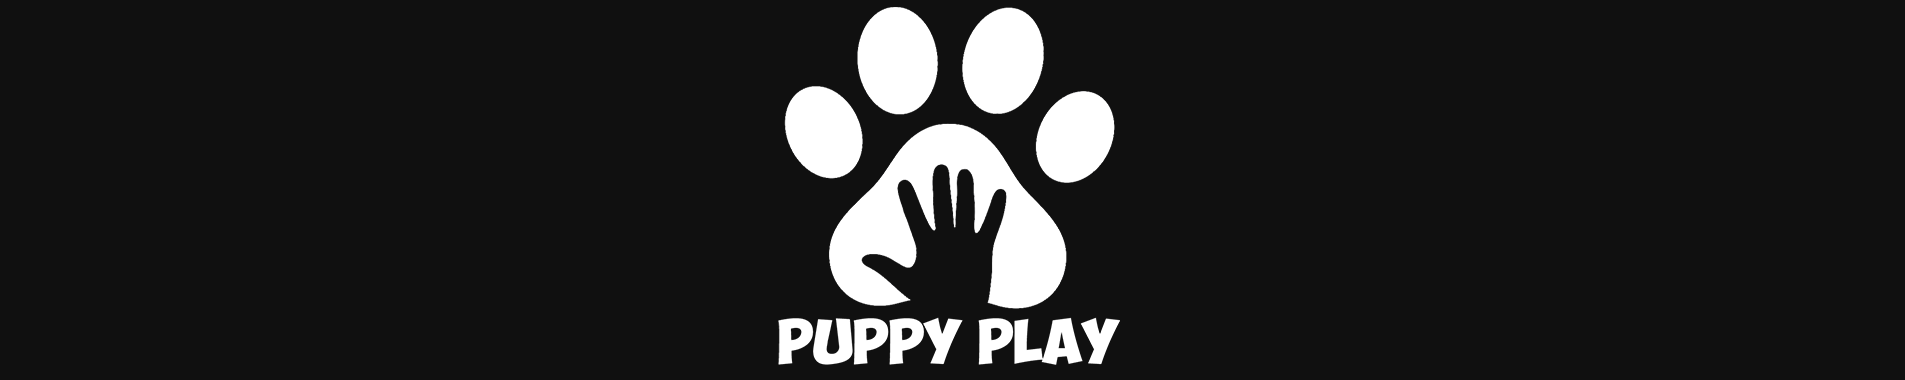 Logos : Puppy Play